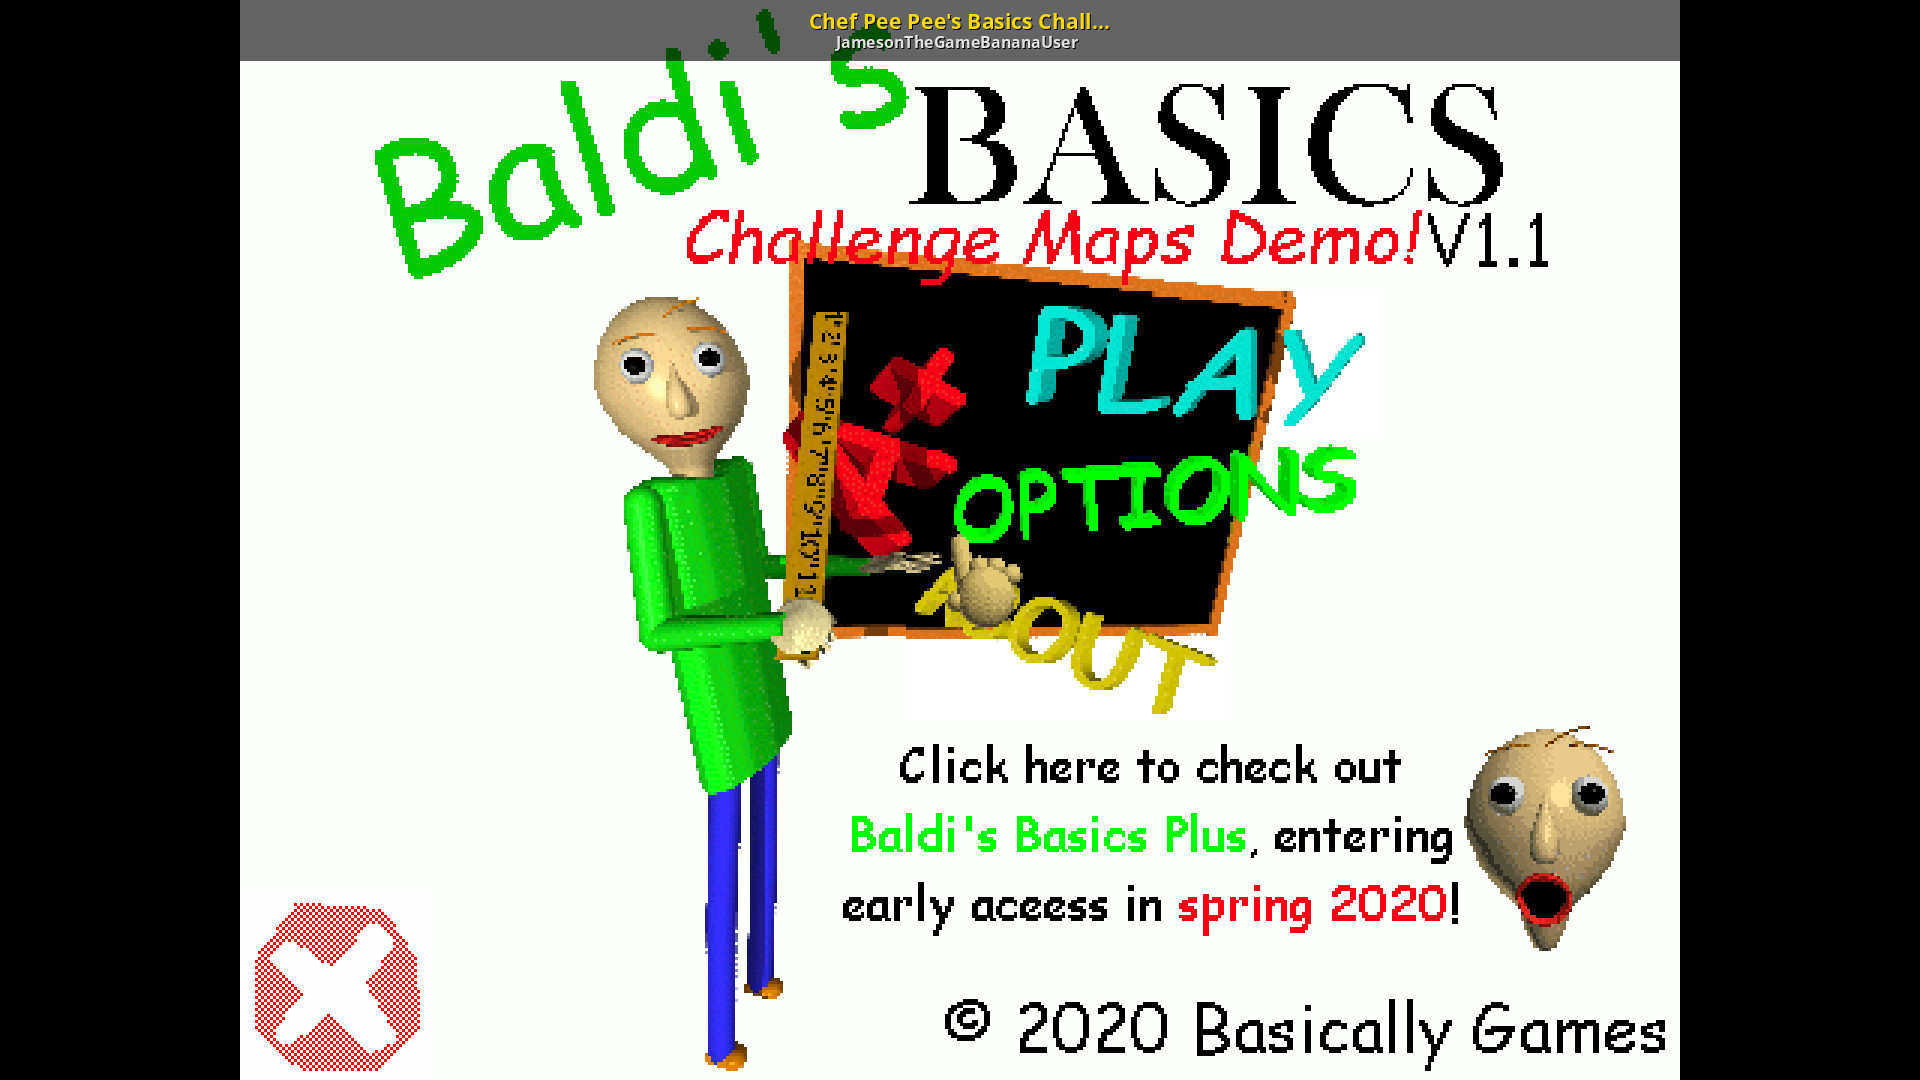 Baldis basics plus 0.4 mod